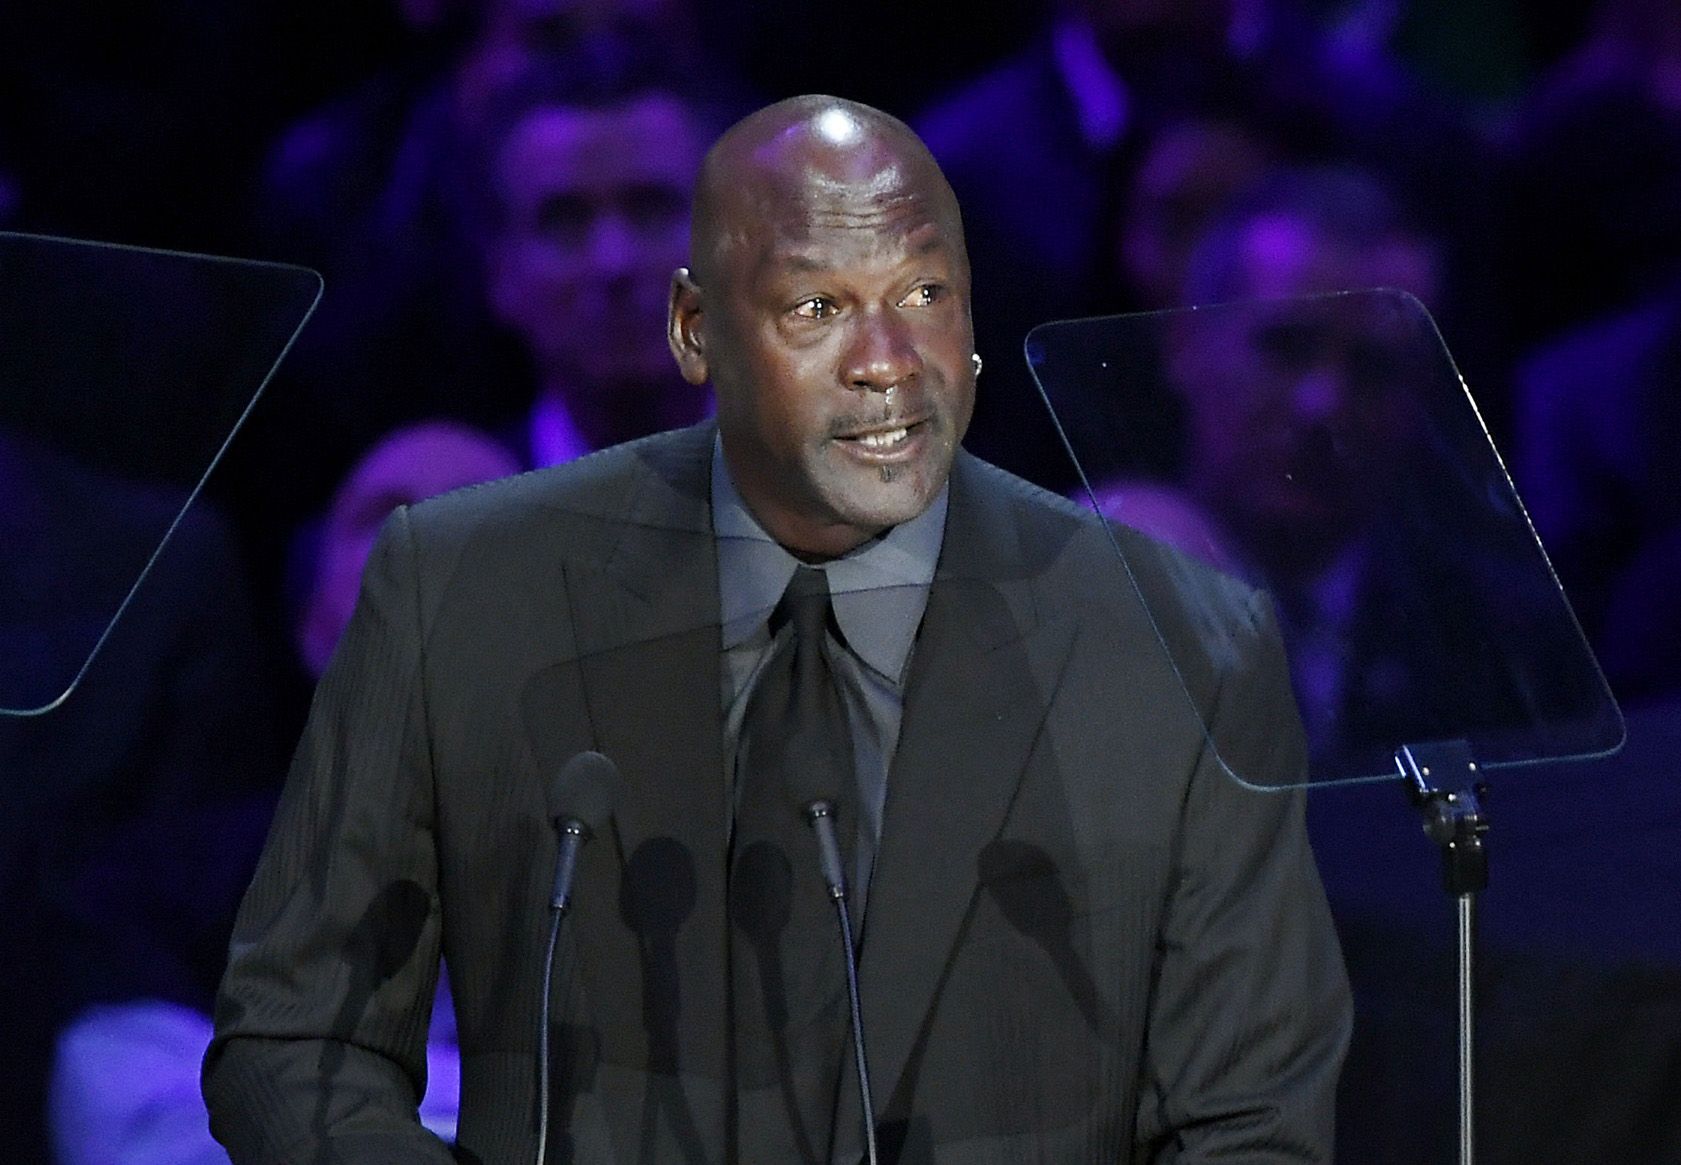 Michael Jordan to Donate $100 Million to Black Lives Matter